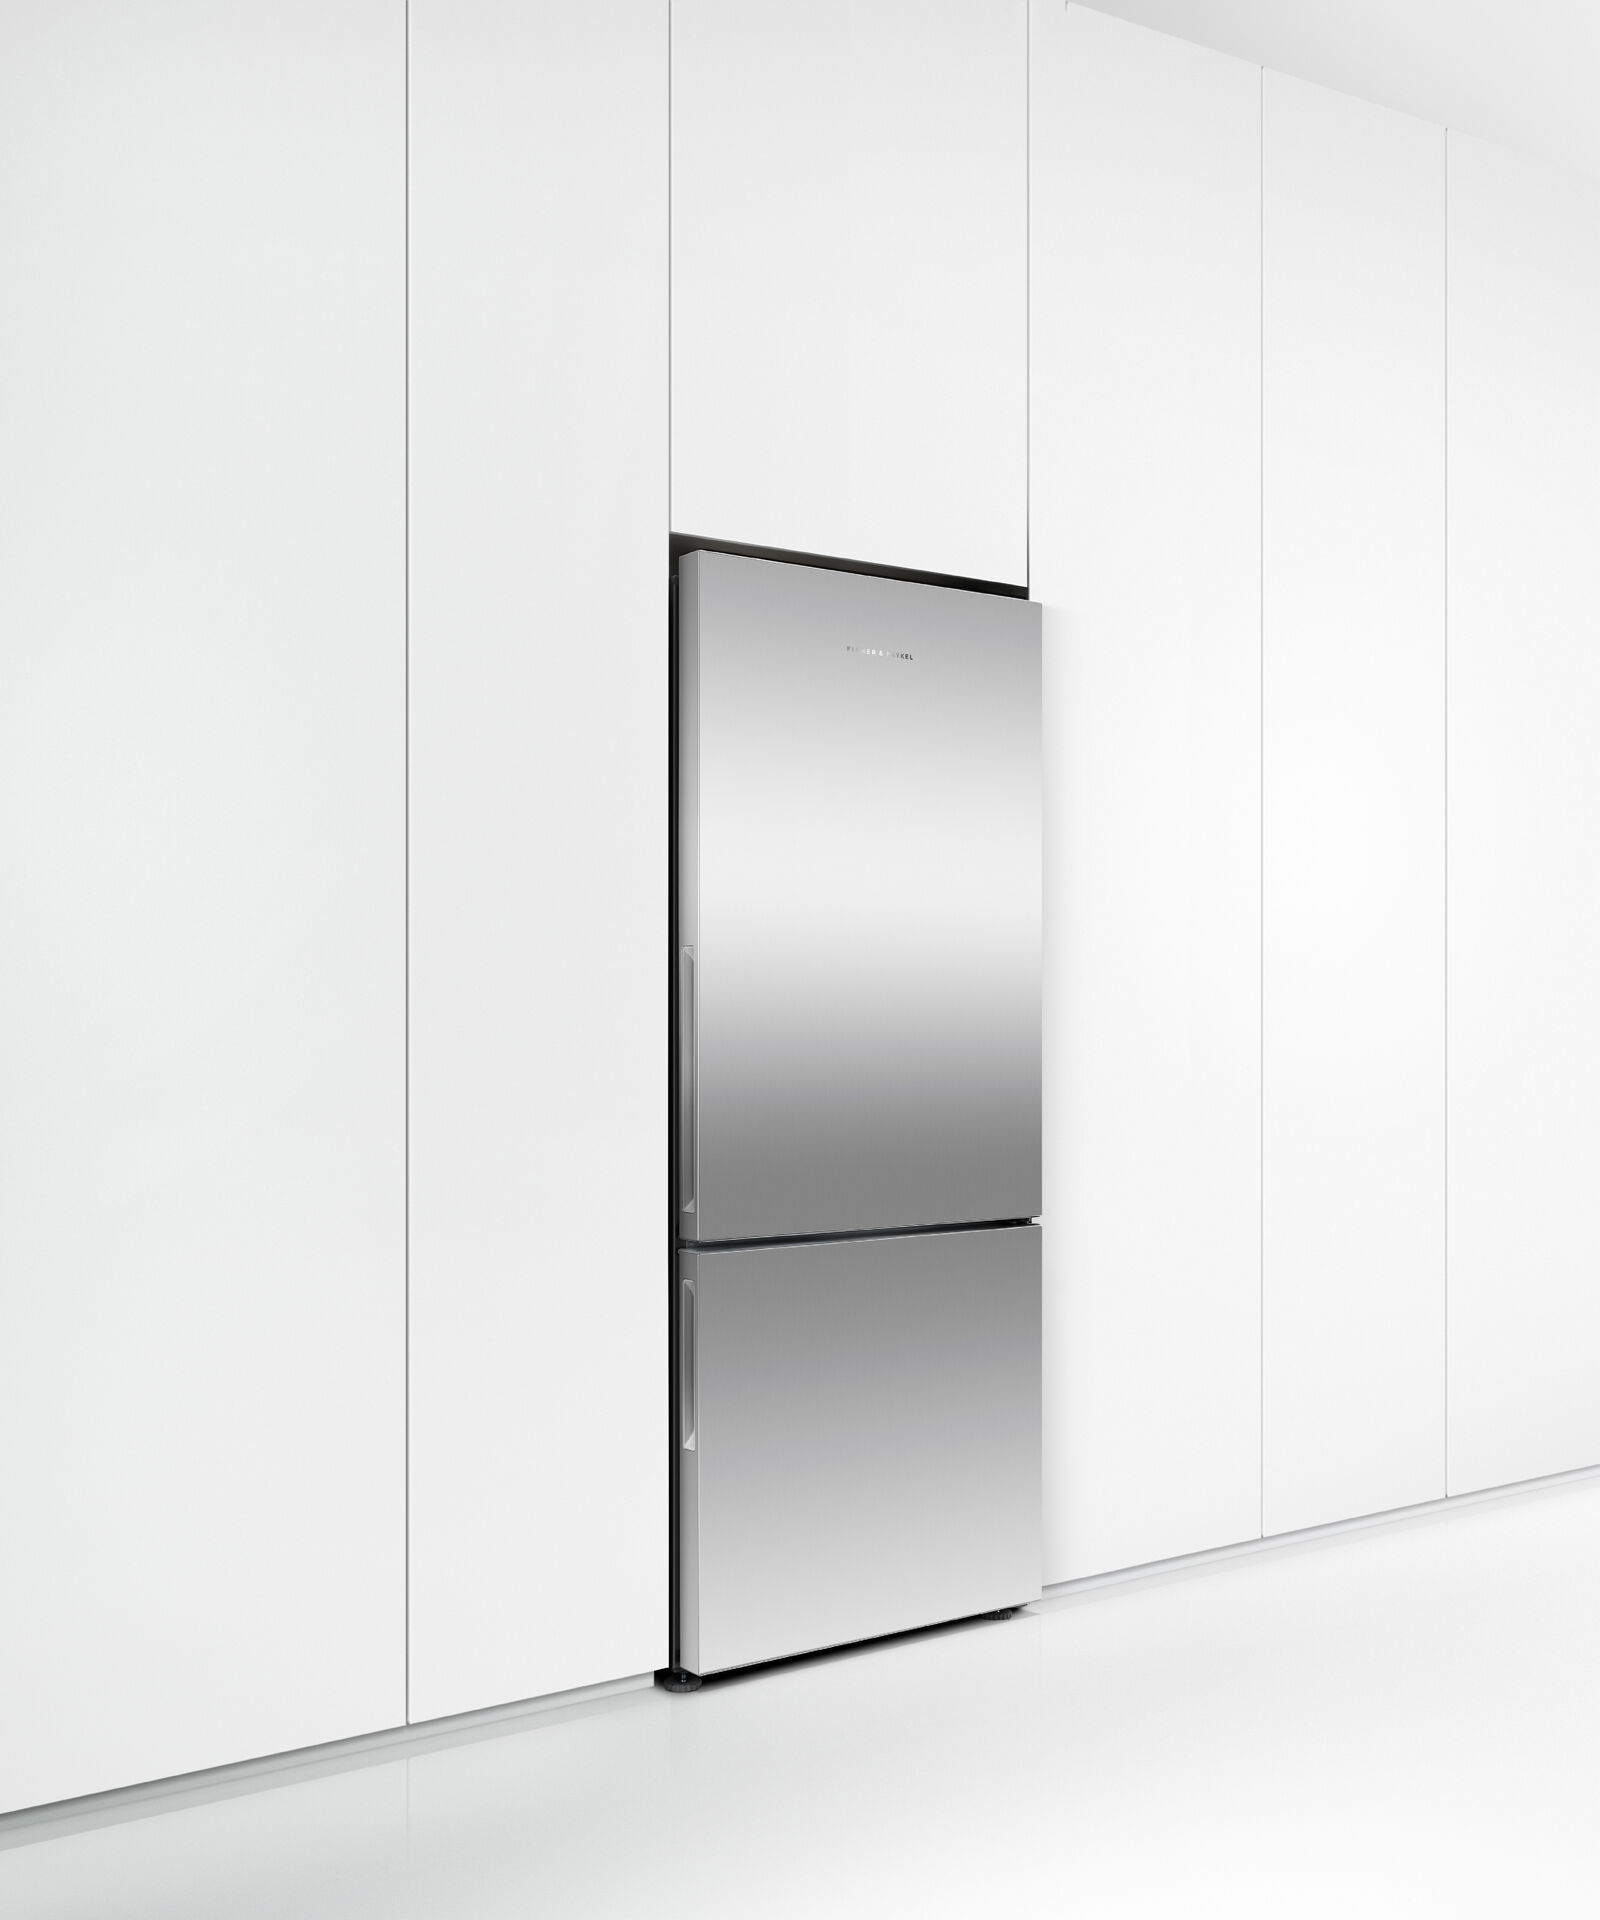 獨立式雪櫃冷凍櫃, 68cm, gallery image 5.0